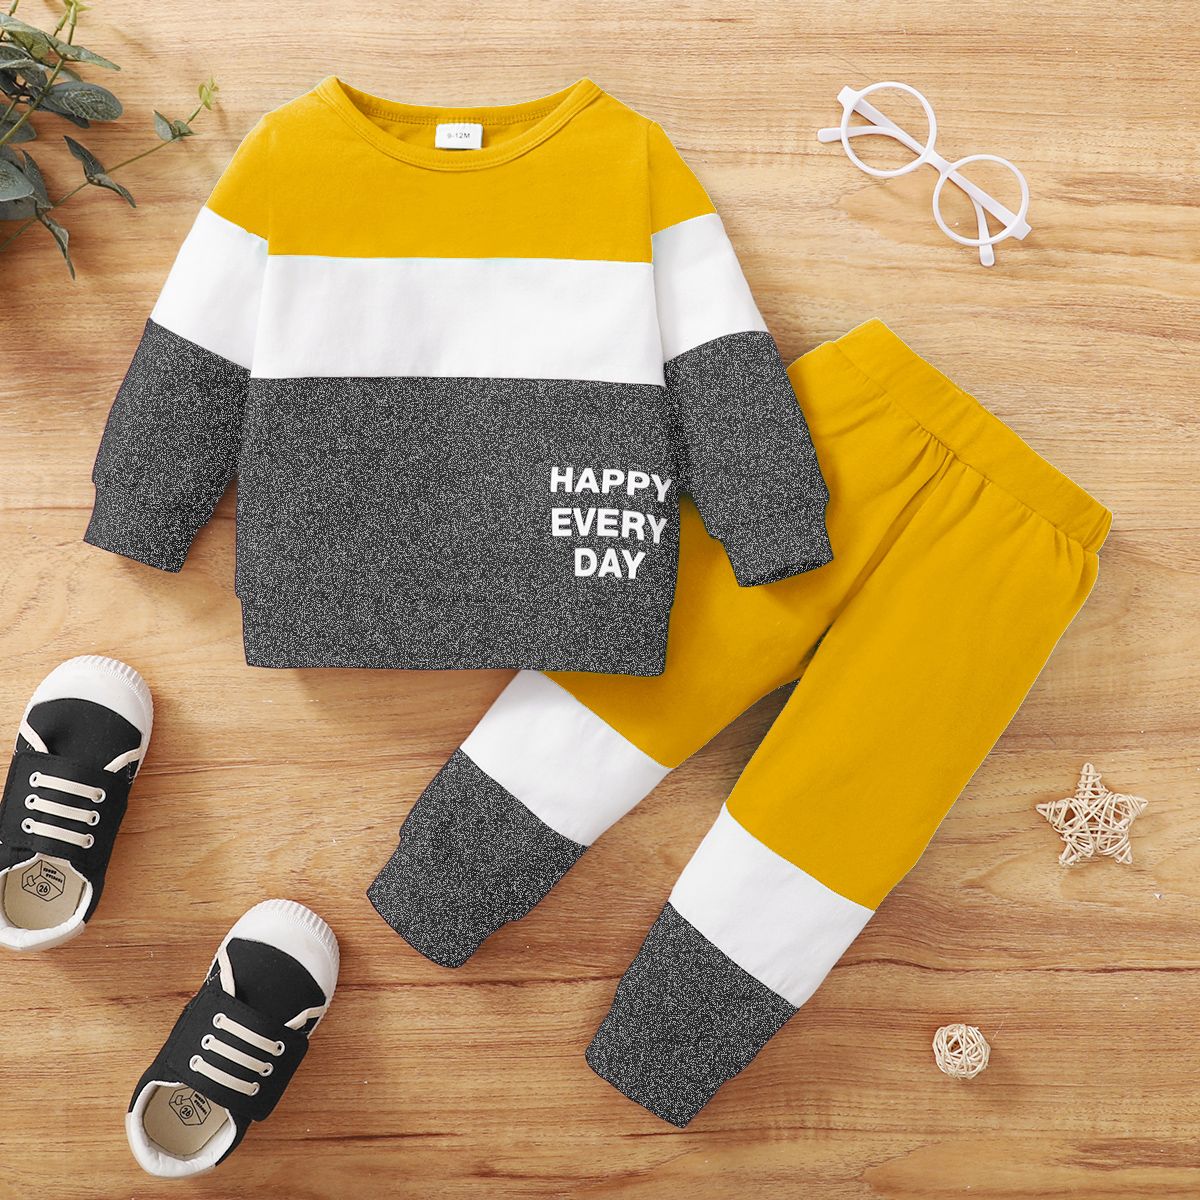 2pcs Baby Boy 95% Cotton Long-sleeve Letter Print Colorblock Sweatshirt and Pants Set